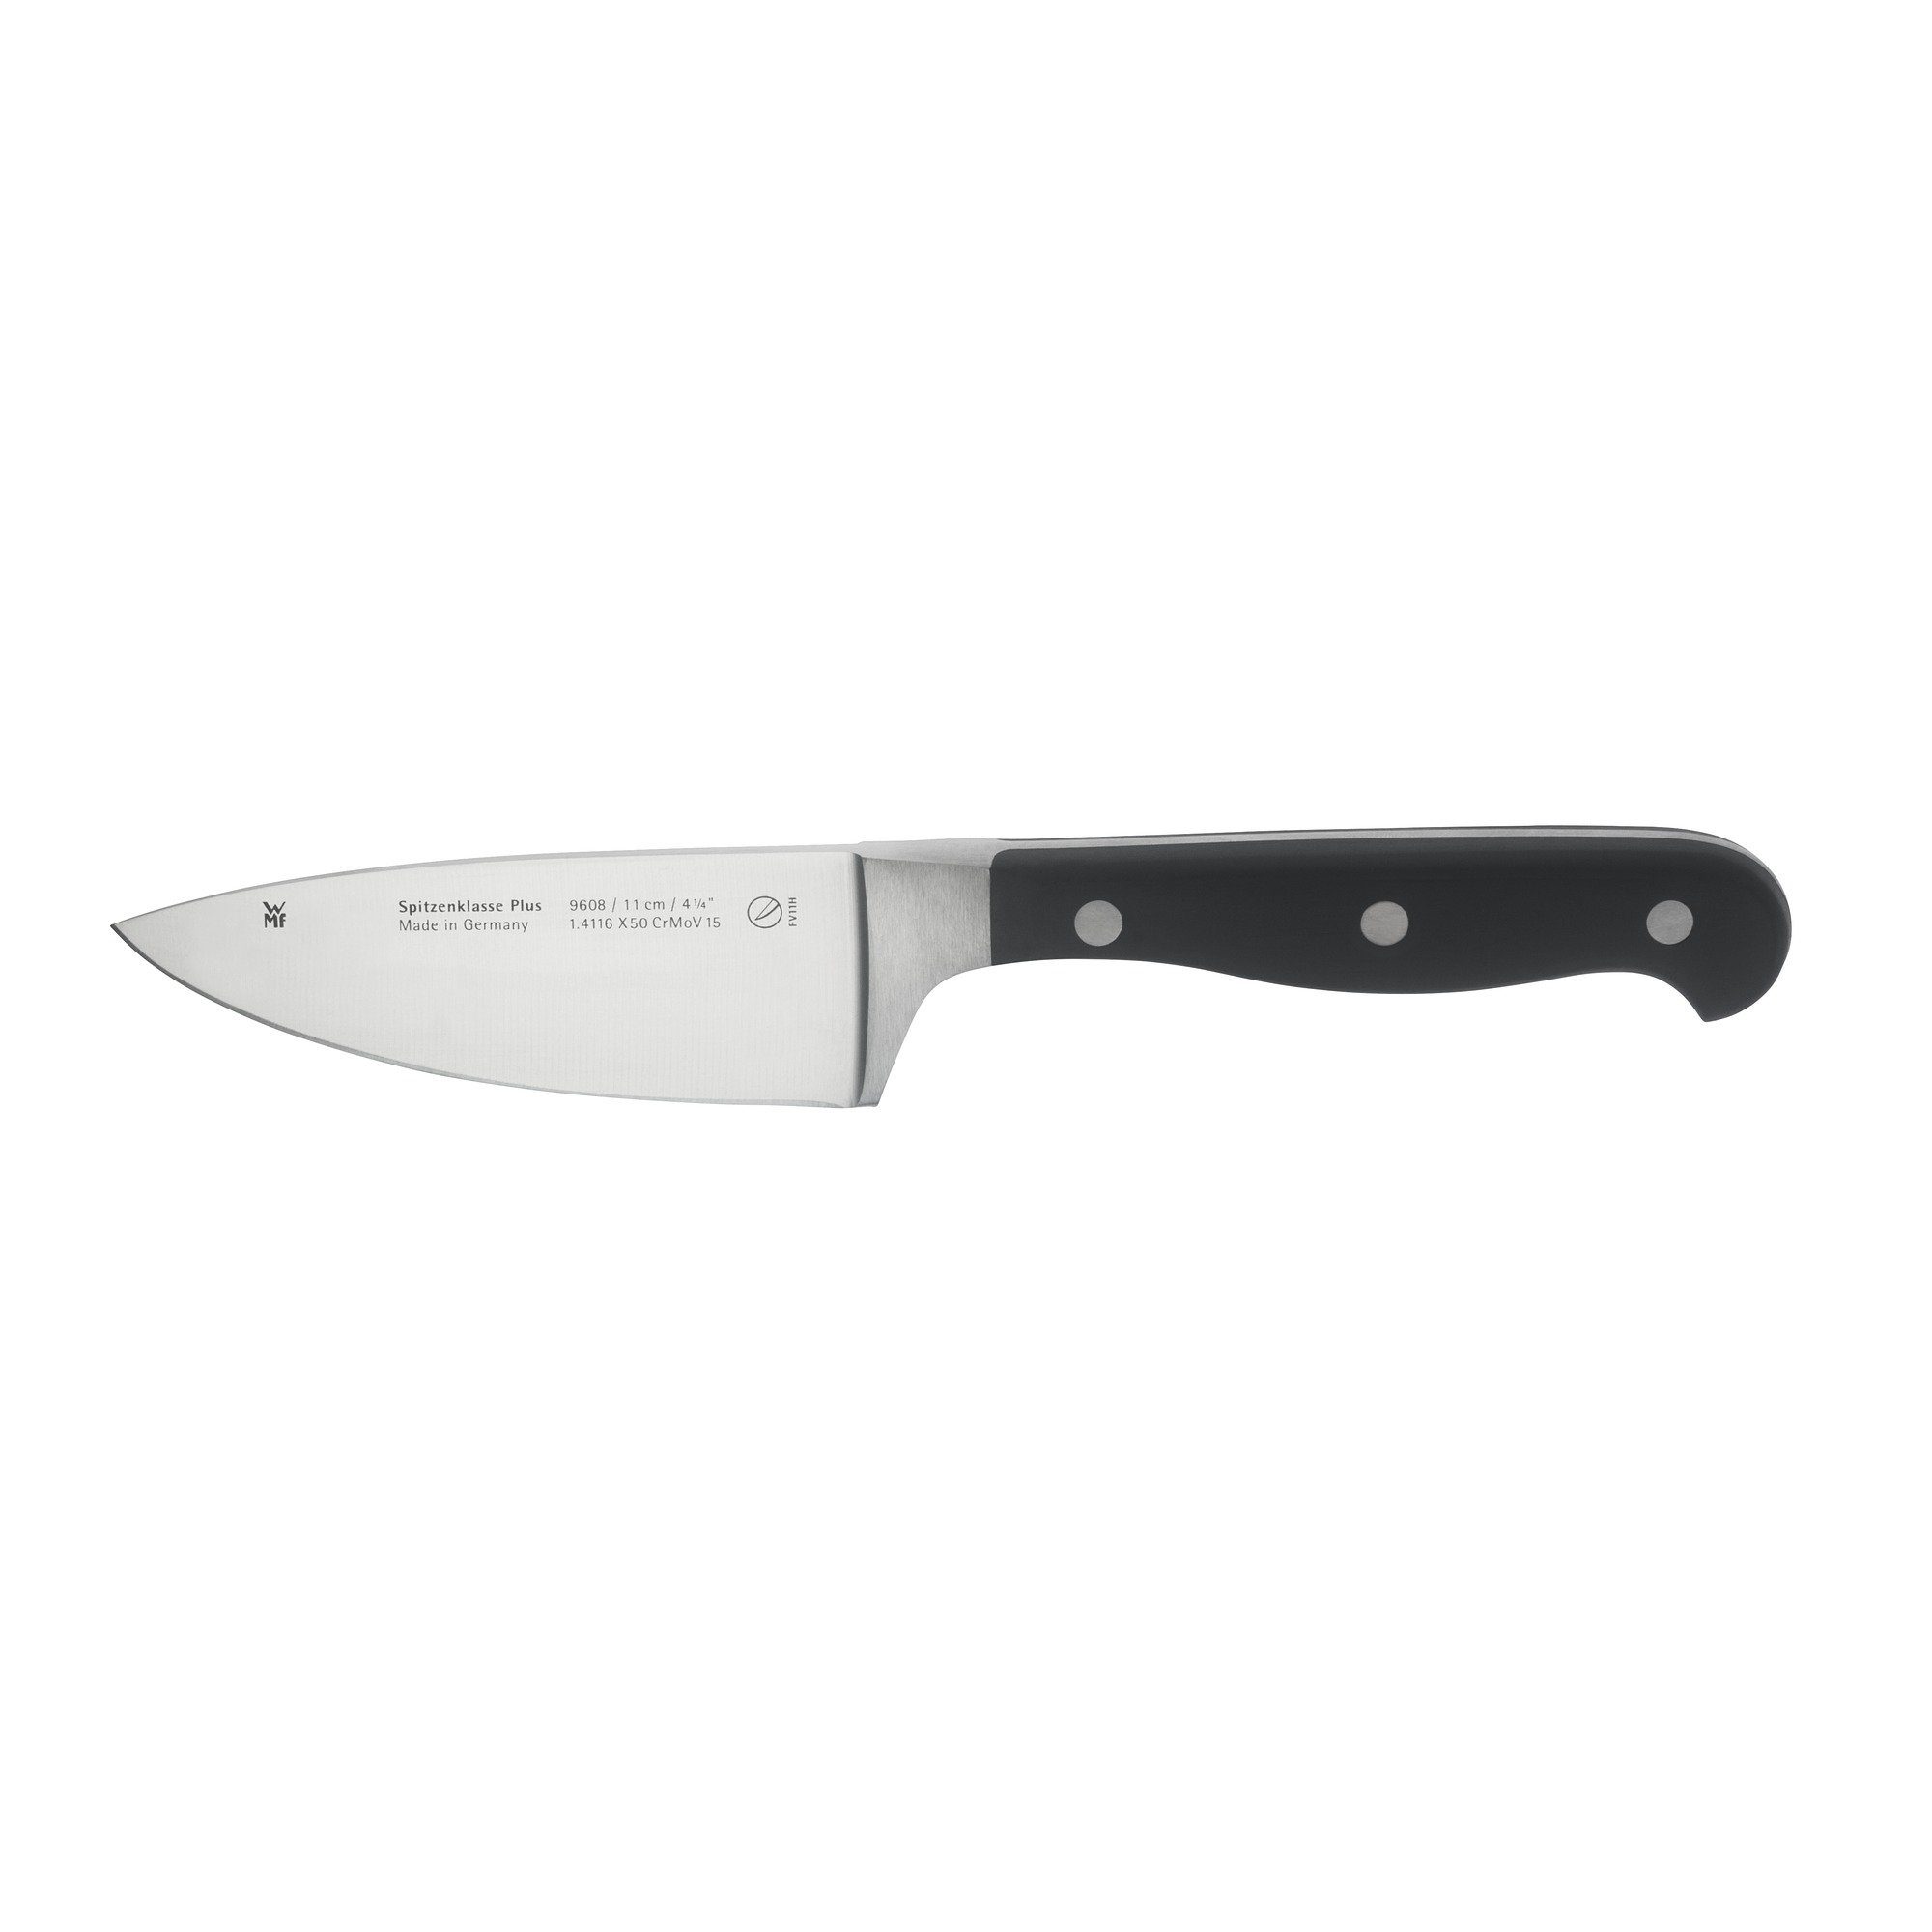 WMF Käsemesser Spitzenklasse Plus, Messer geschmiedet, Performance Cut, Spezialklingenstahl, Klinge 11 cm